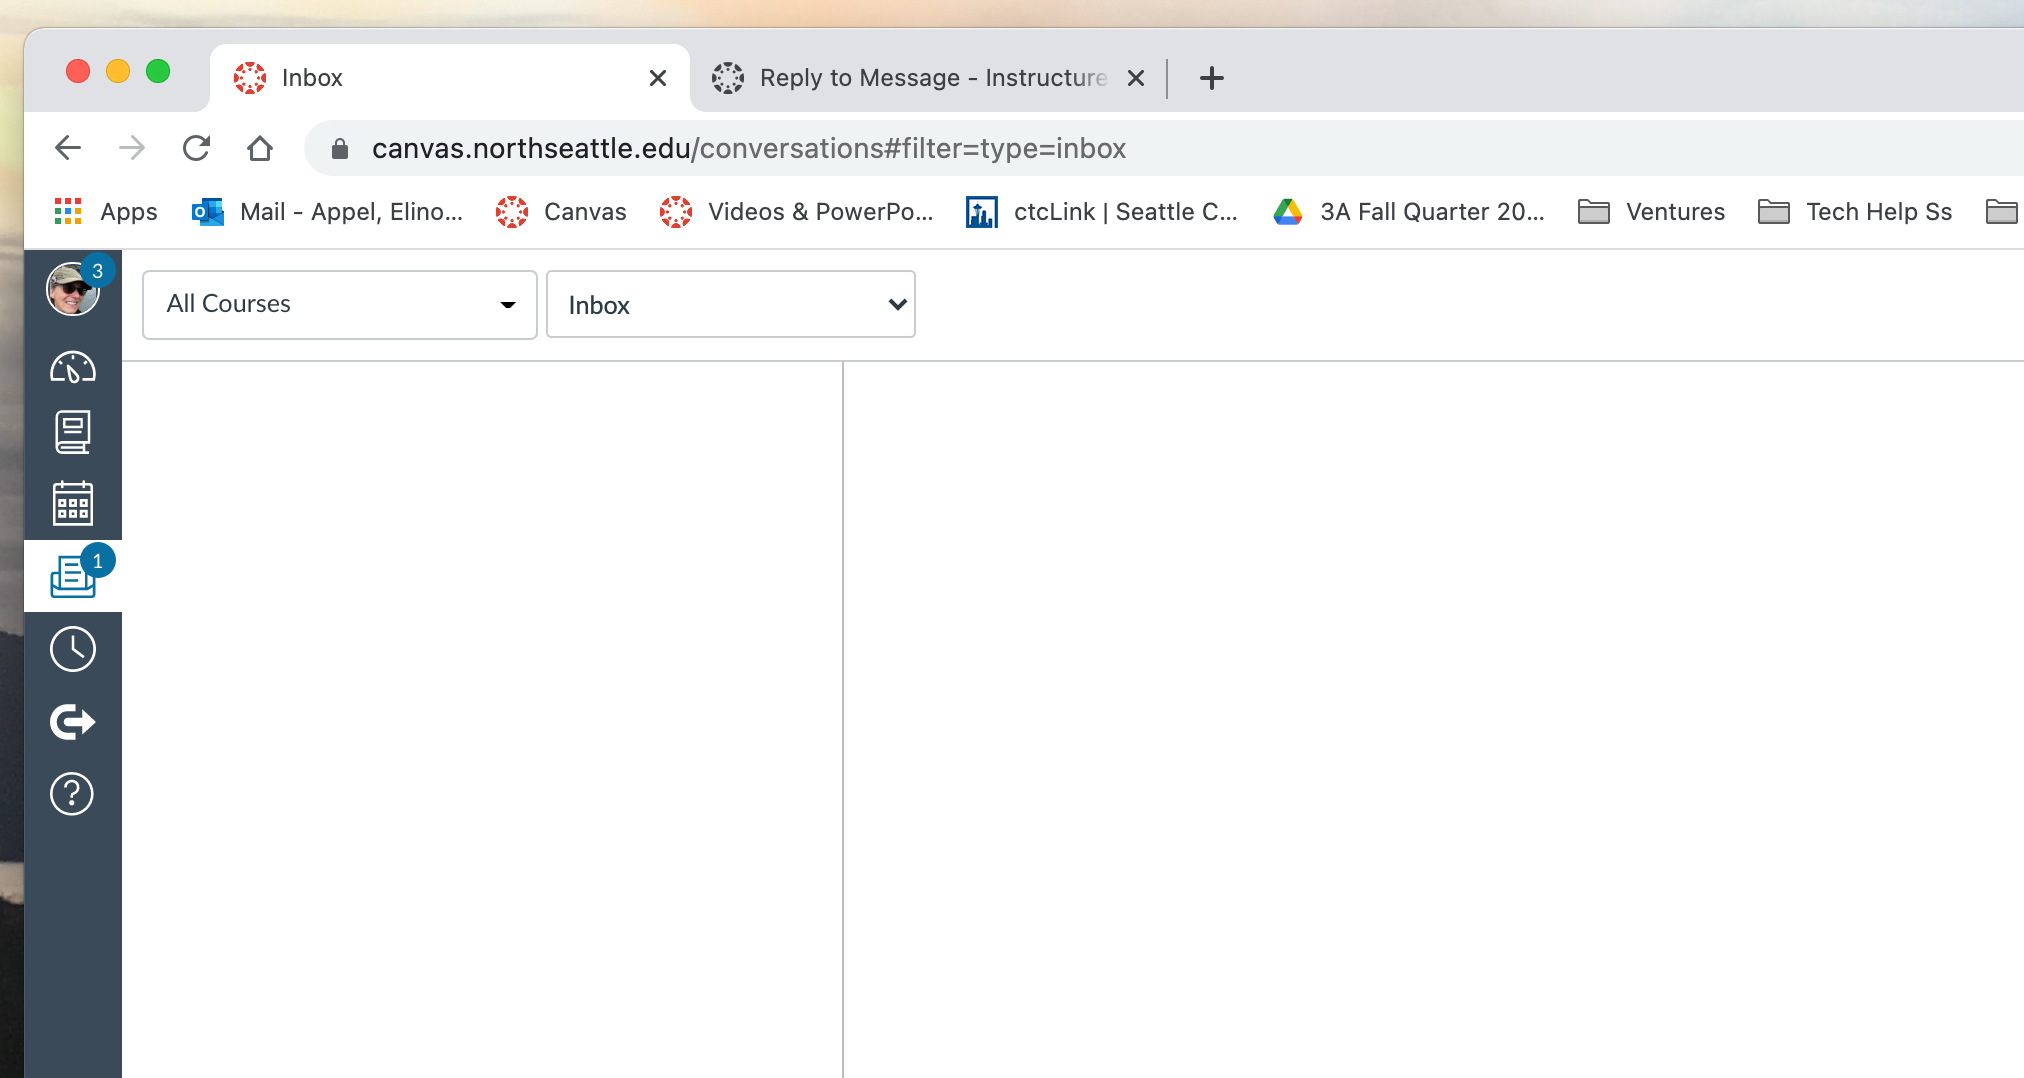 Google Chrome profile cannot sync - Google Chrome Community